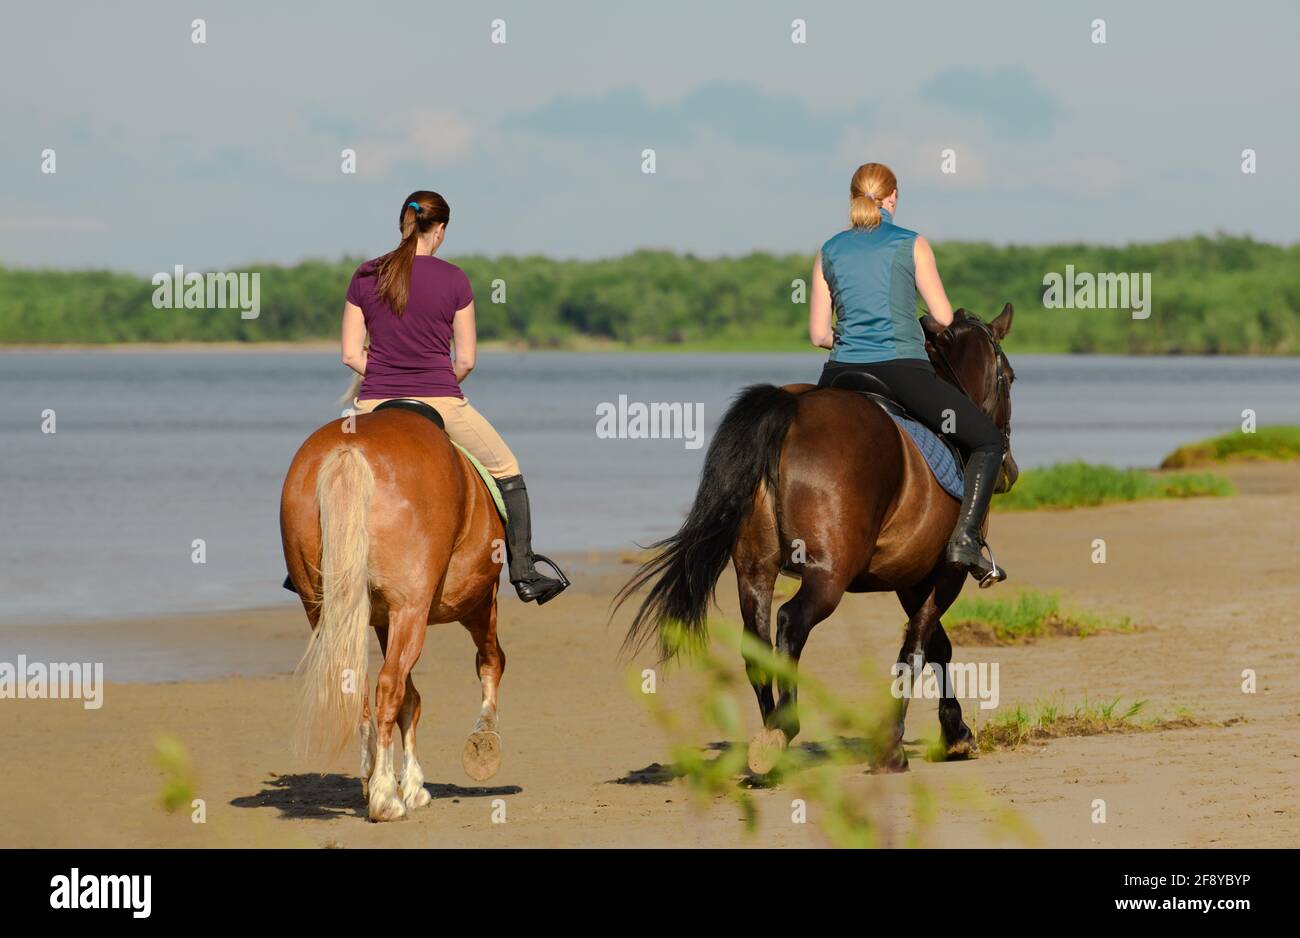 Dos mujeres están montando a caballo en la playa, vista trasera. Foto de stock